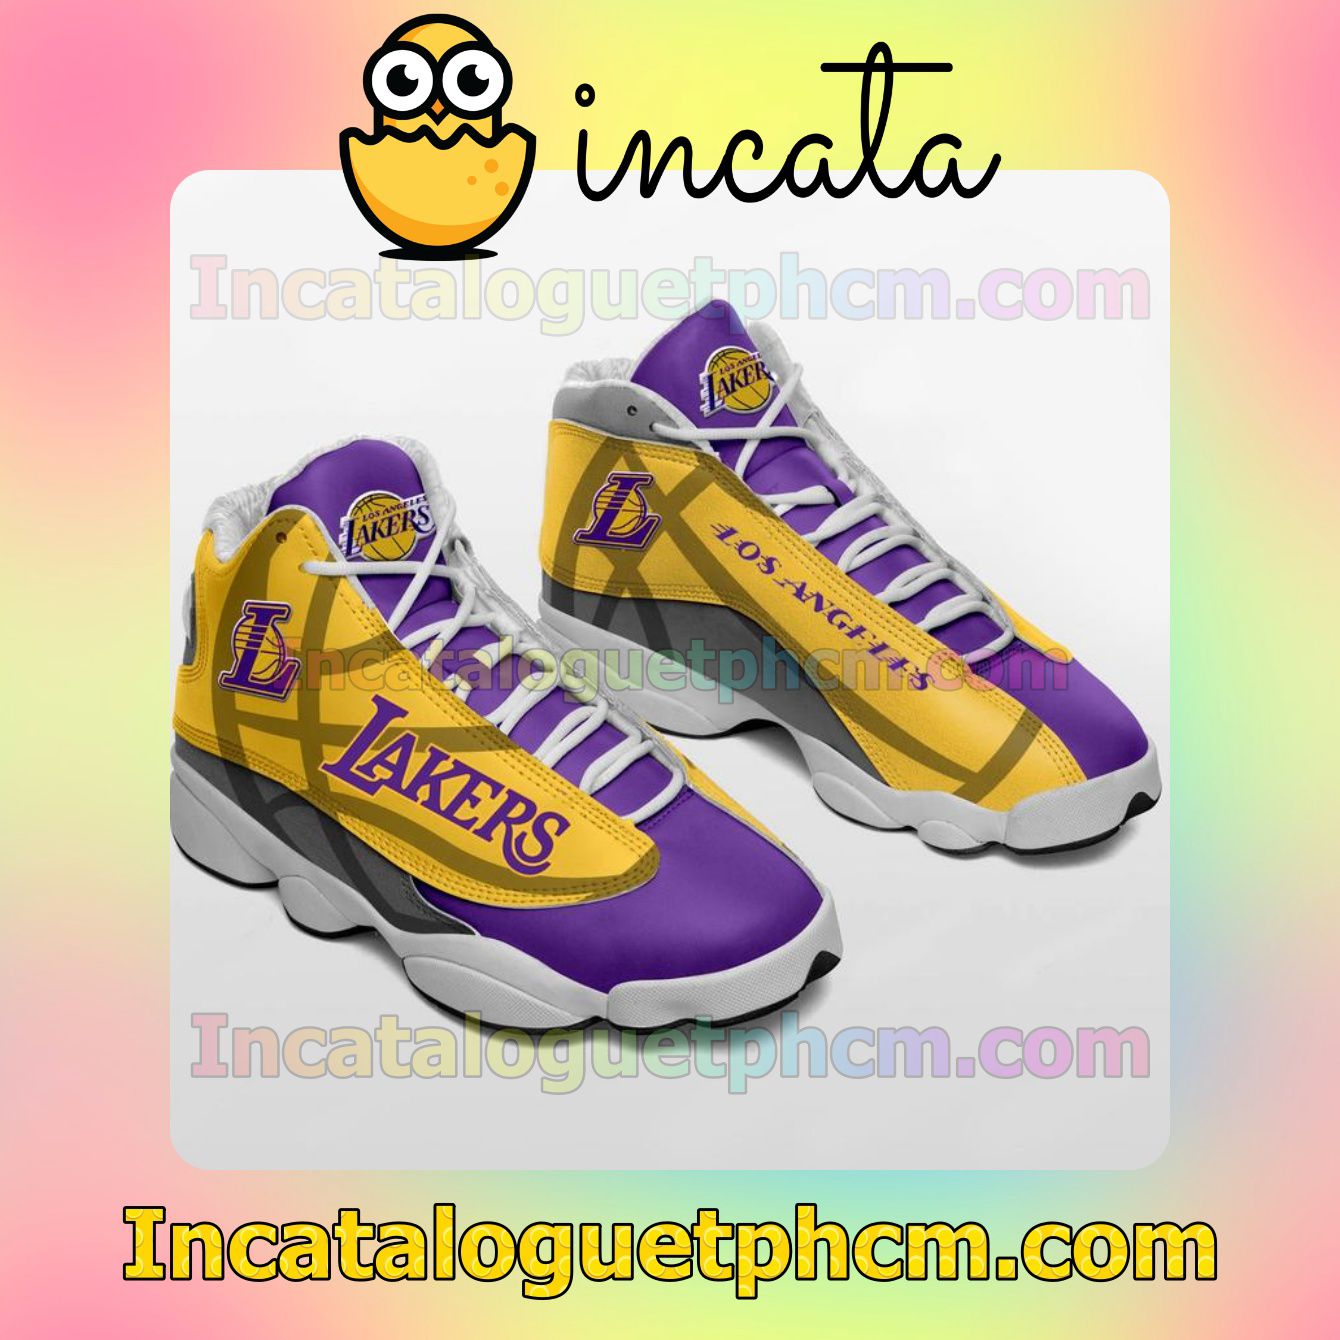 Los Angeles Lakers Team Form Yellow Purple Jordans